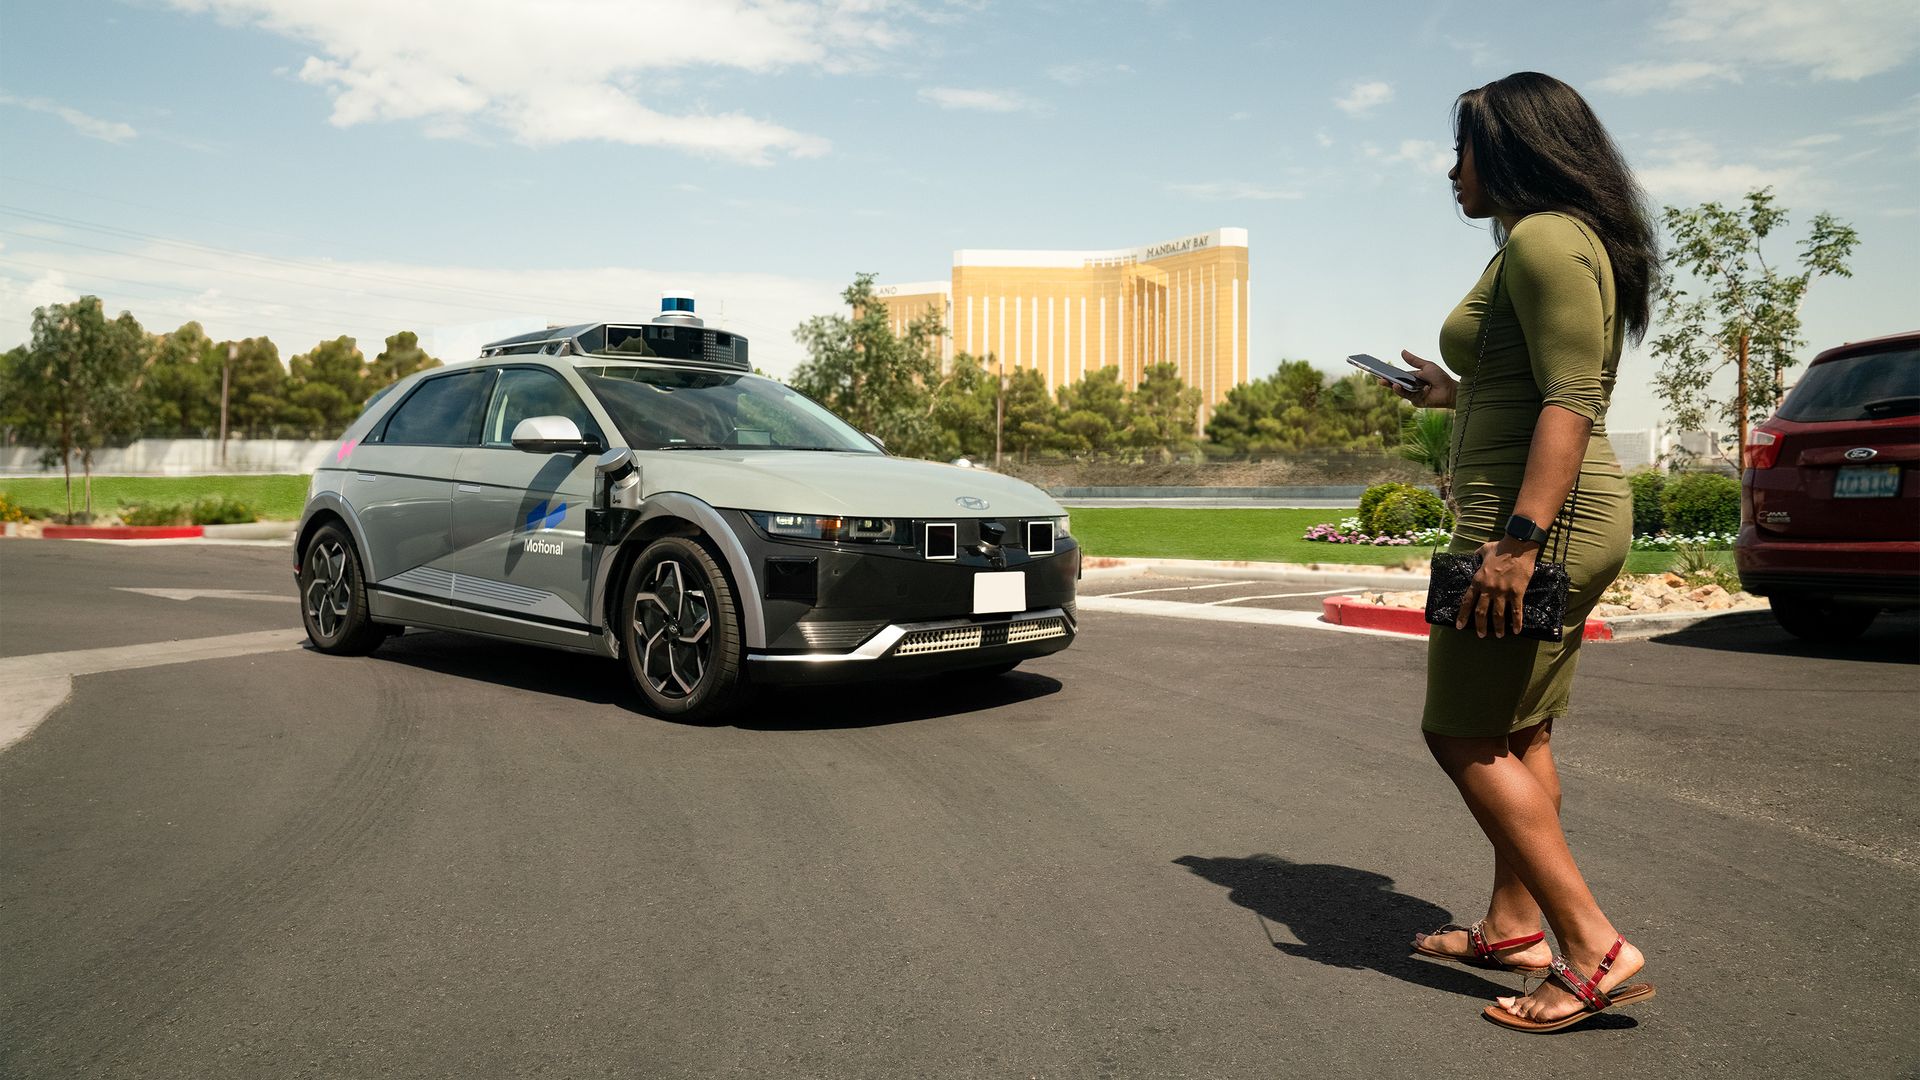 A woman prepares to board an autonomous Lyft robotaxi in Las Vegas